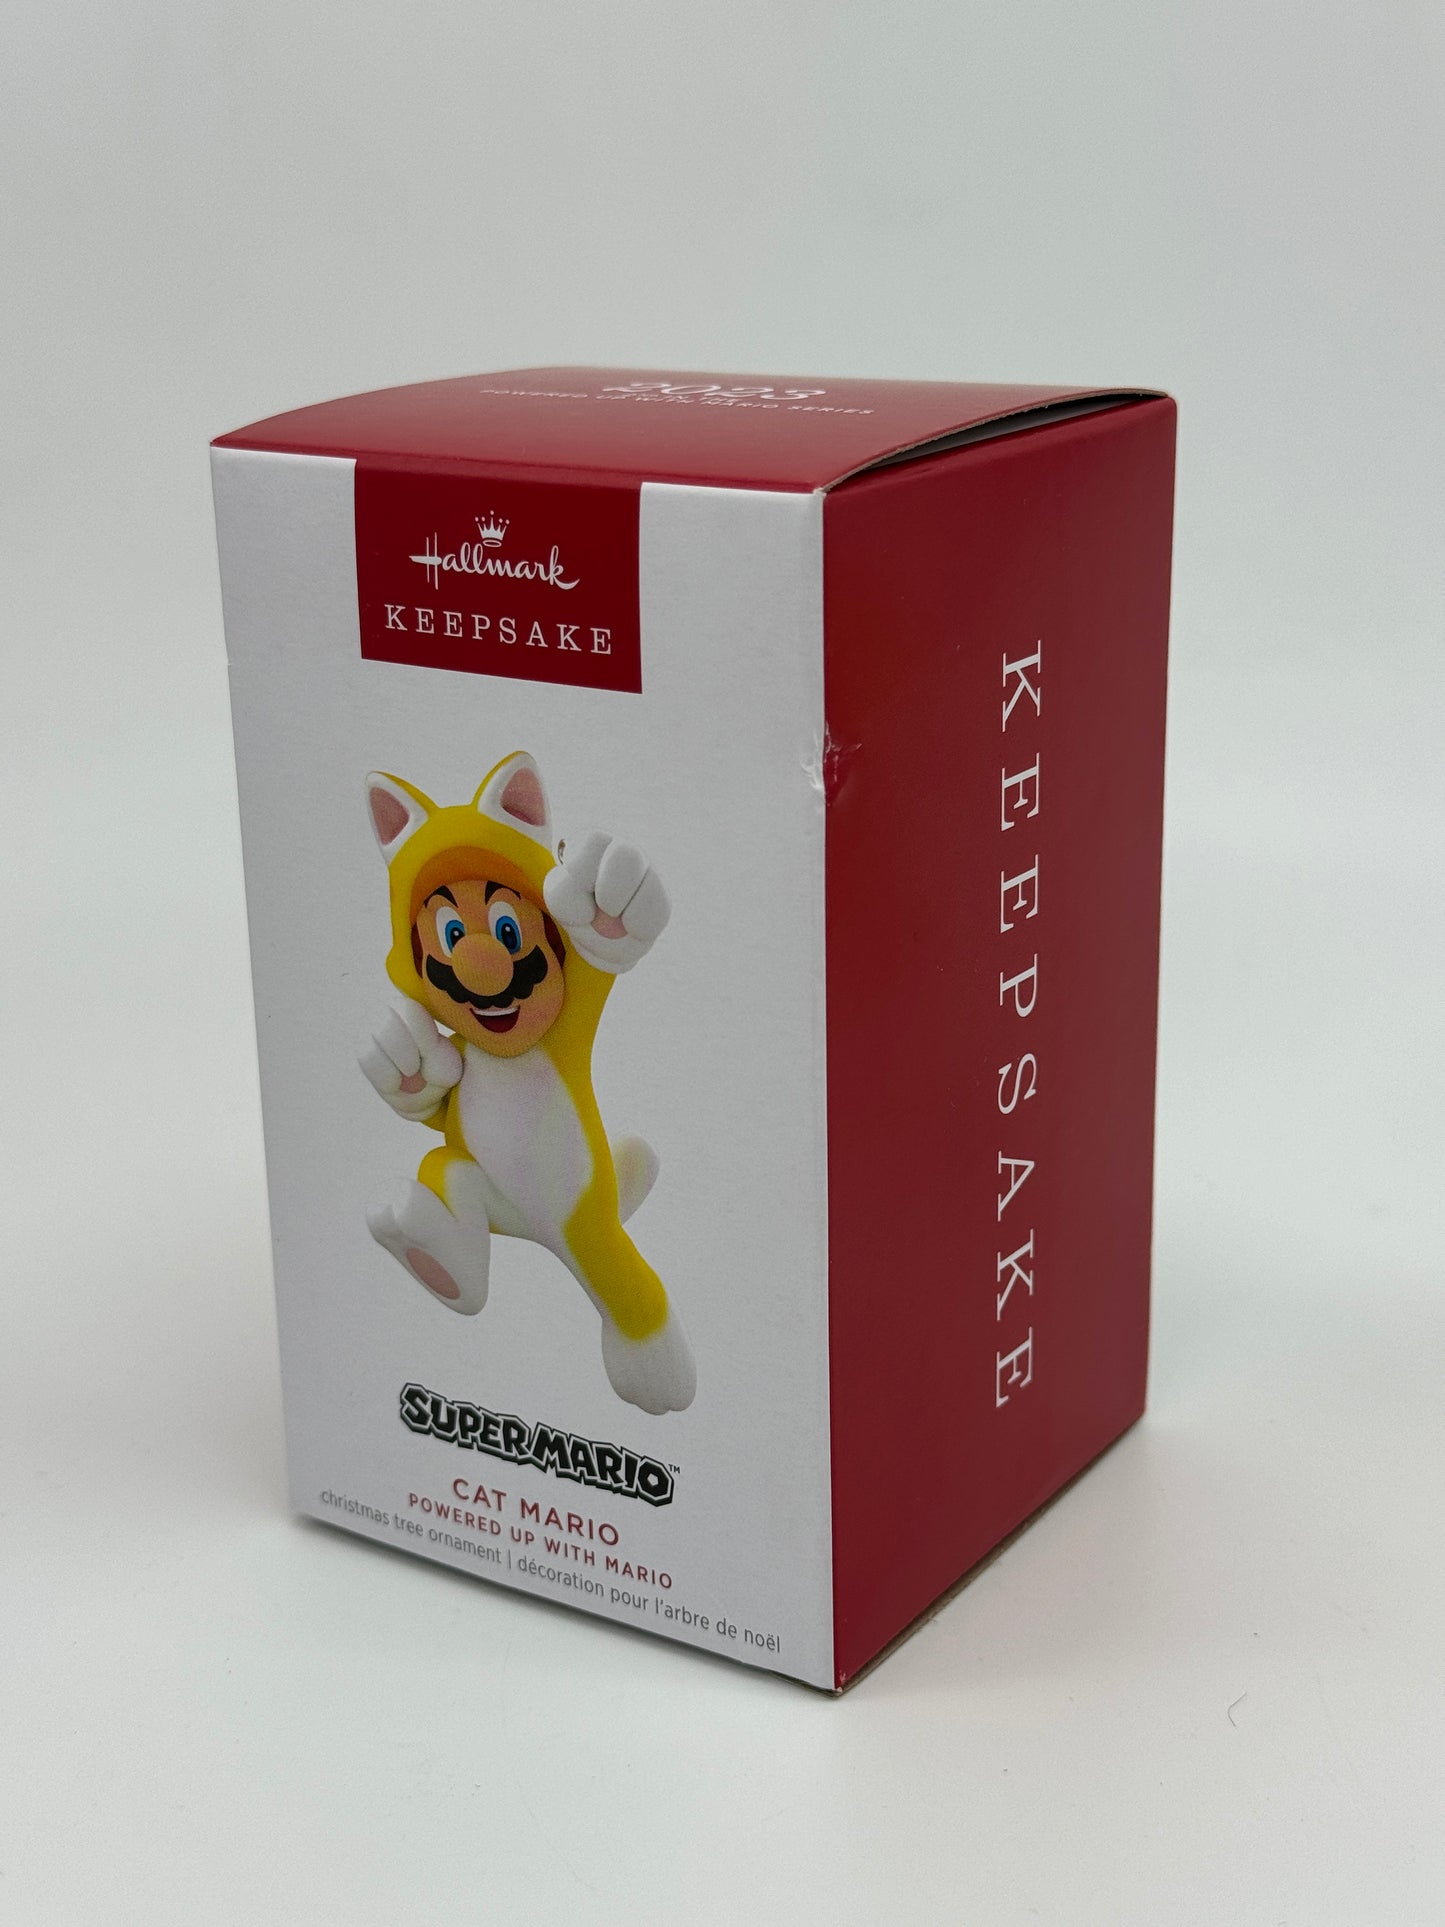 Hallmark Ornaments Nintendo "Super Mario Cat Mario" 2nd Powered Up Keepsake (2023)